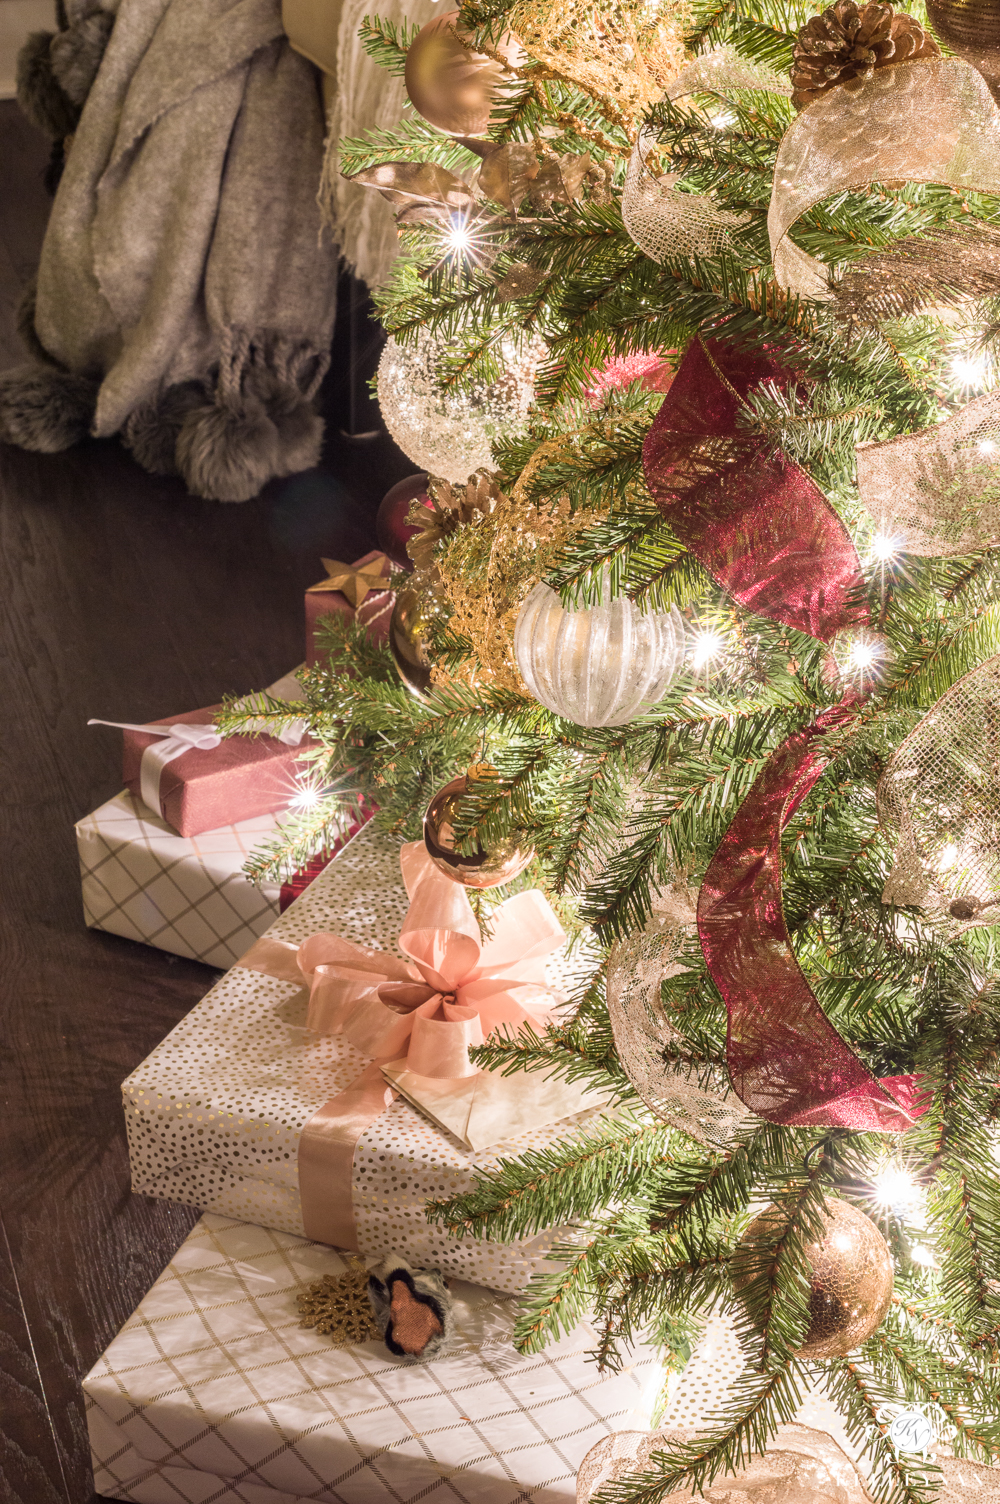 Christmas presents underneath twinkling tree